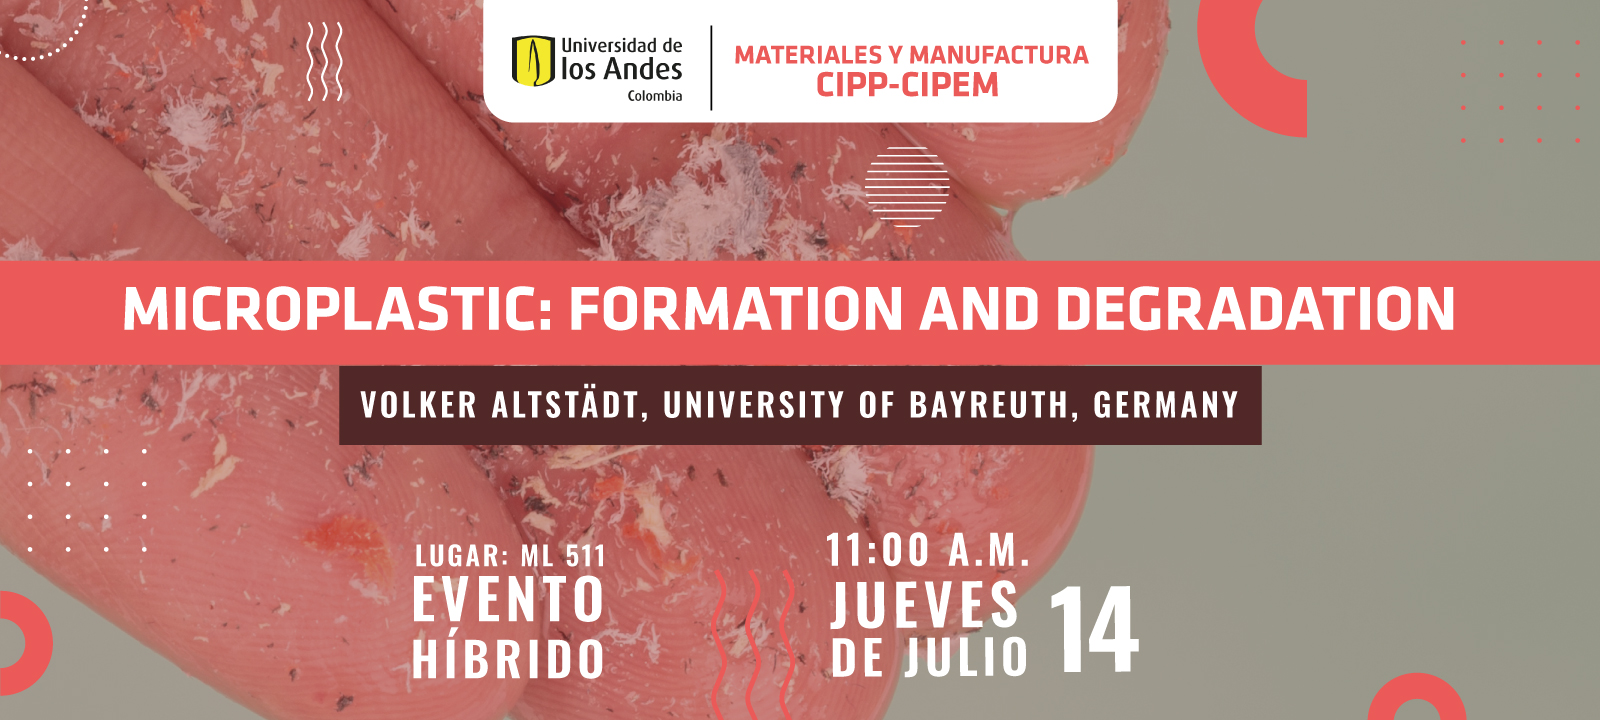 Microplastic - Formation and Degradation professor Volker Altstadt University of Bayreuth